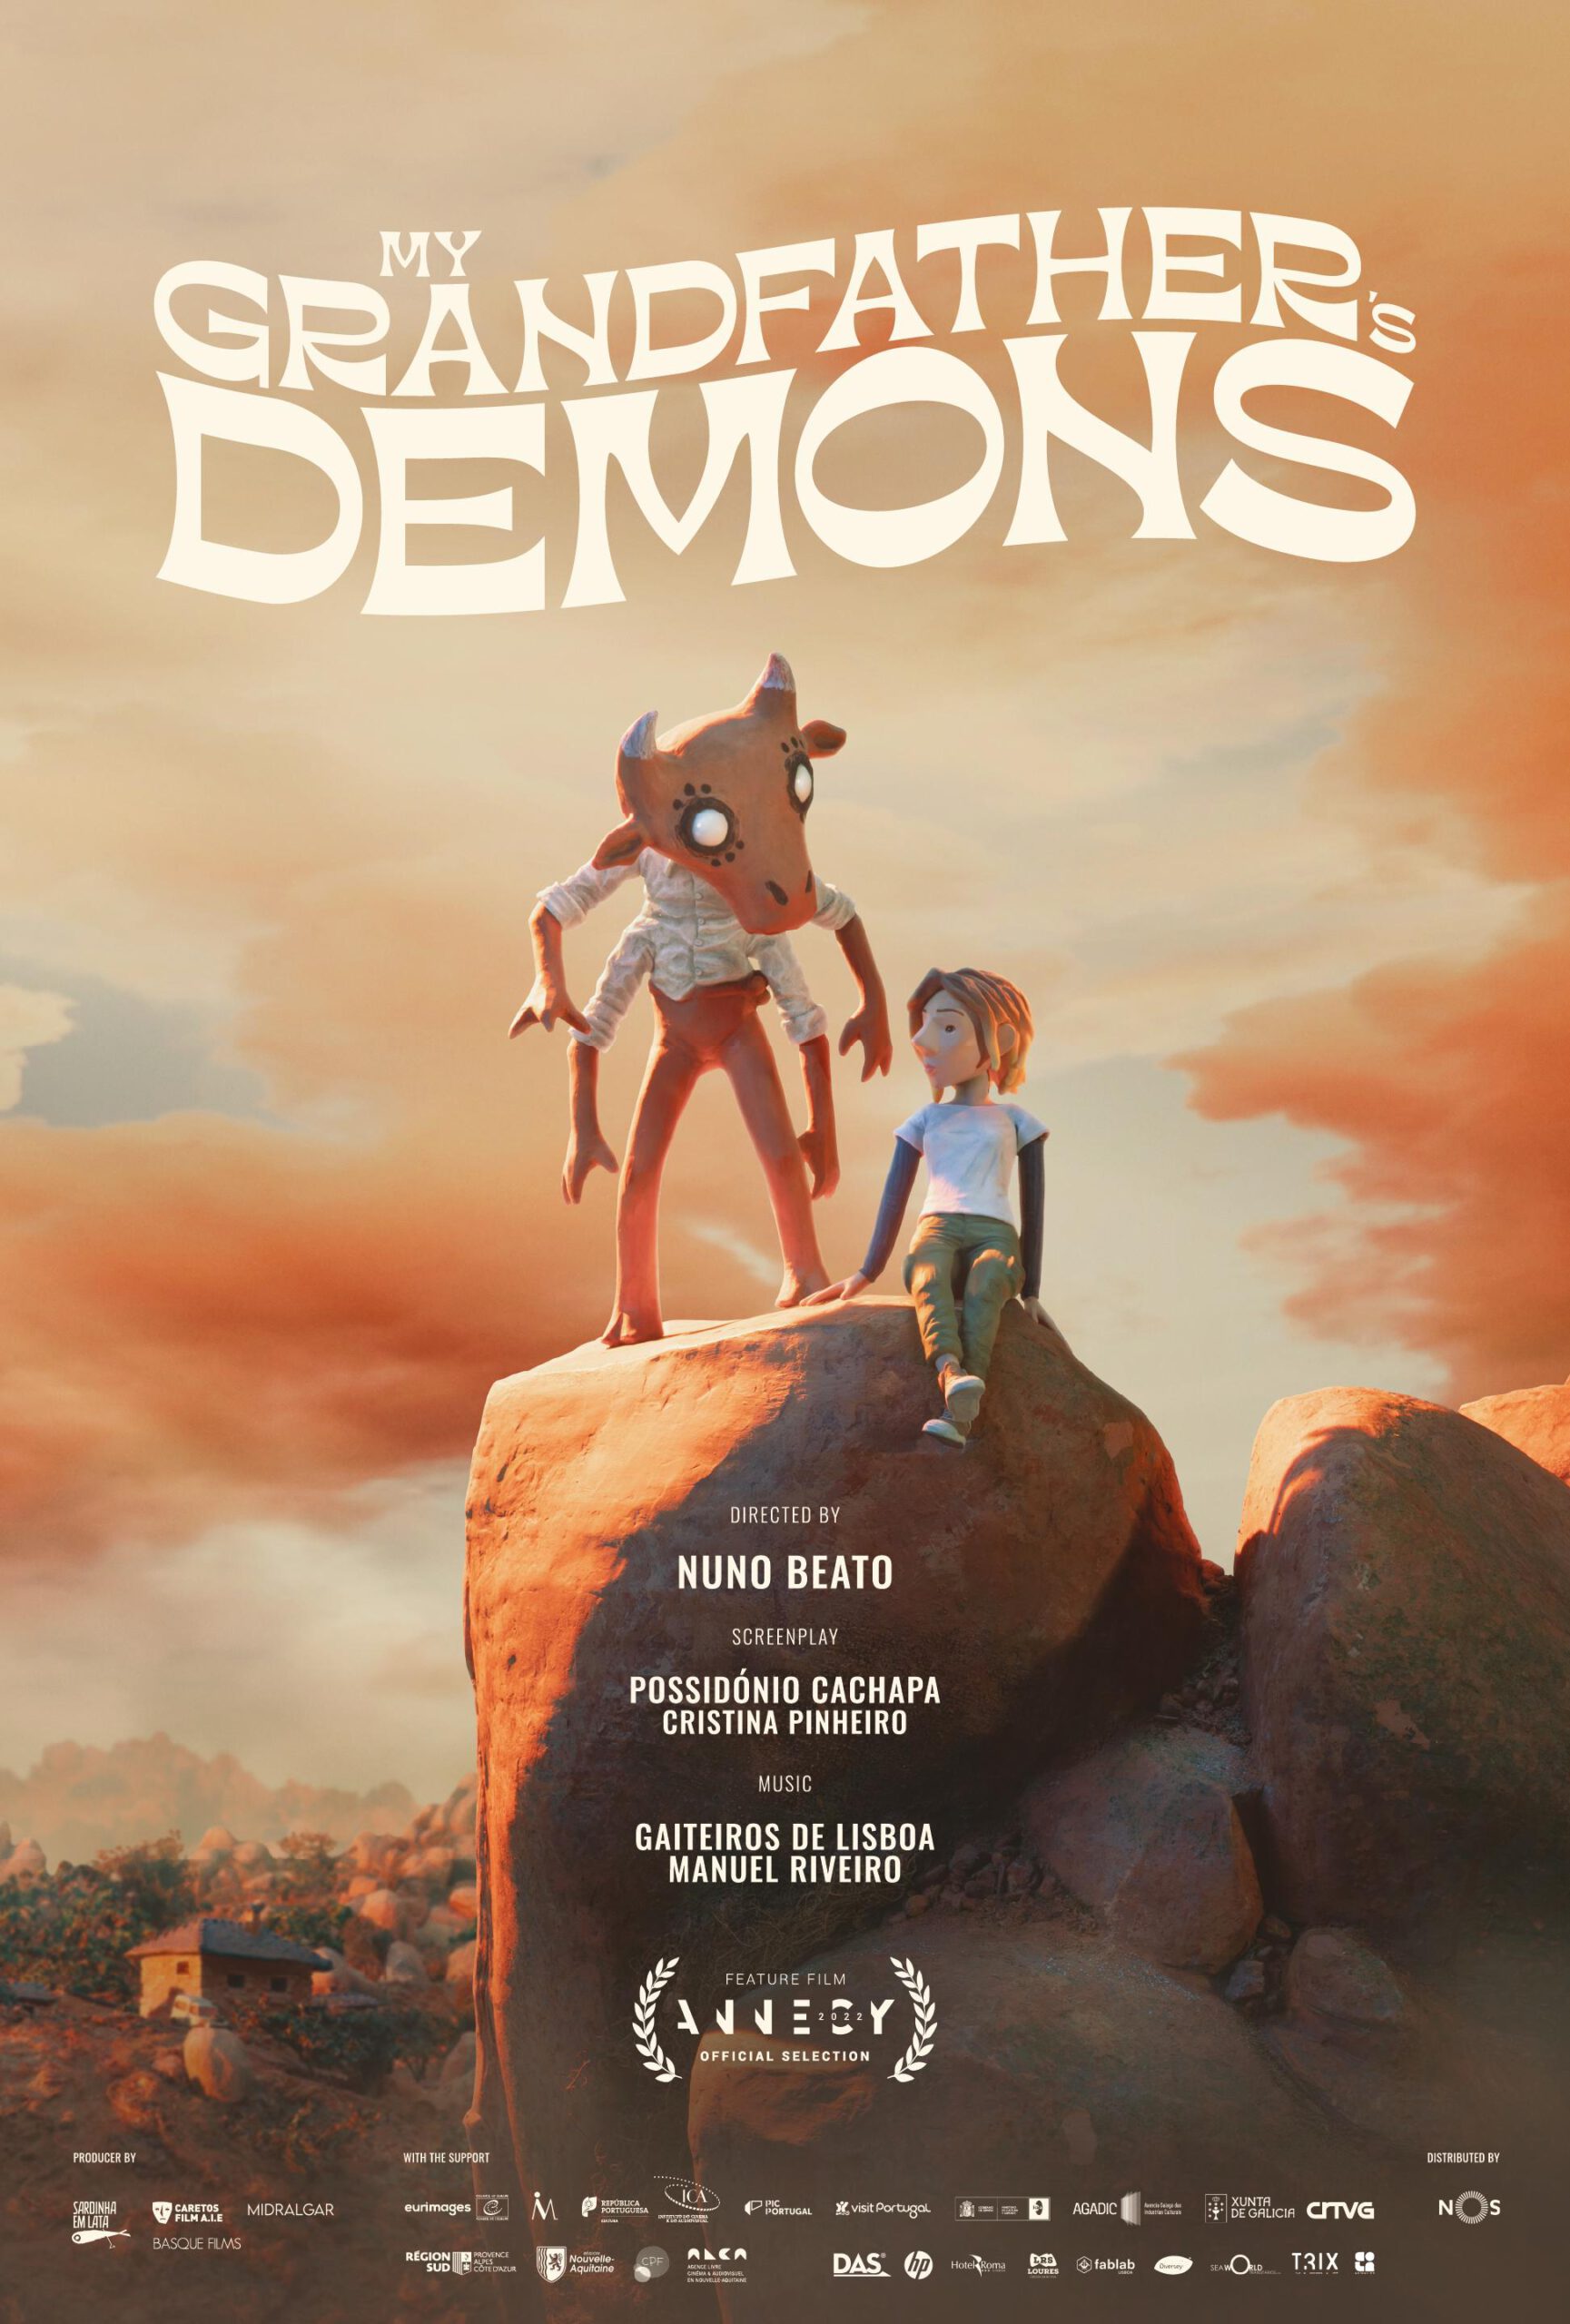 Poster Imagine Film Festival: My Grandfather's Demons